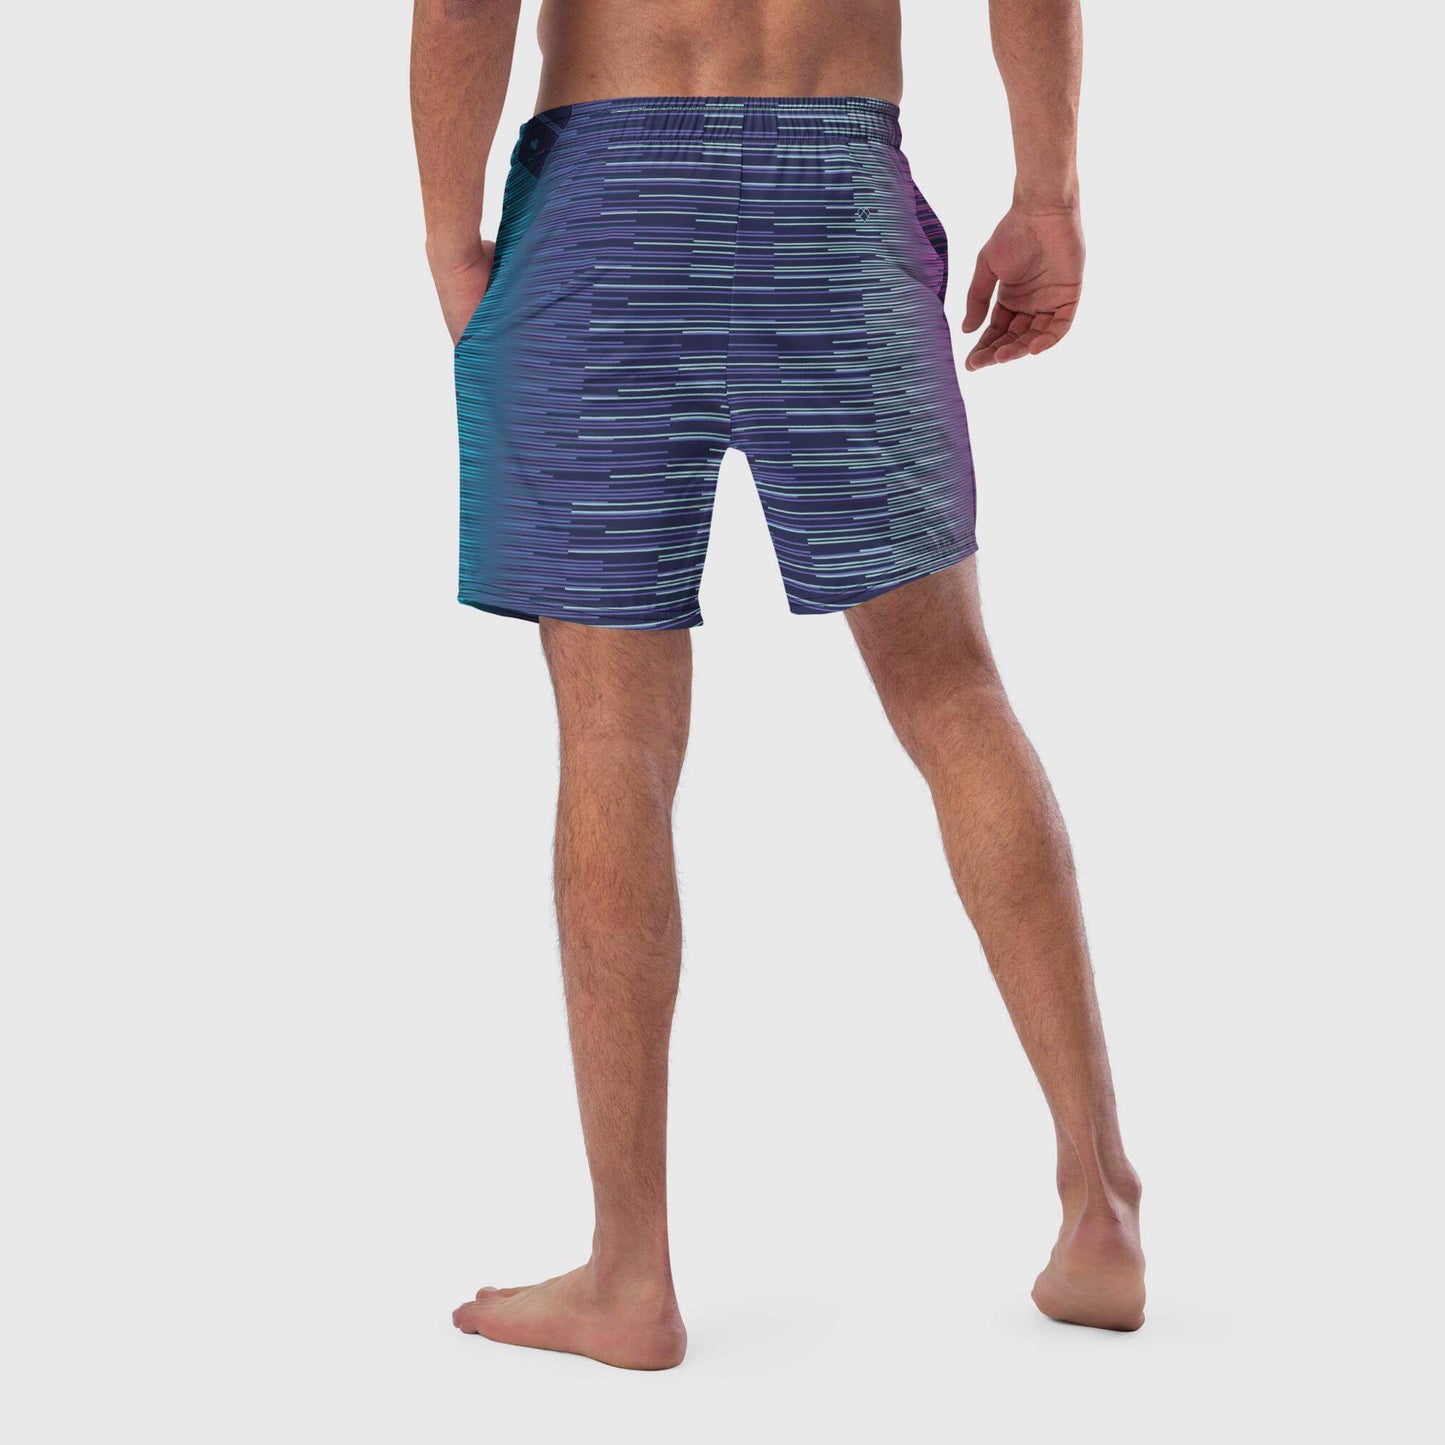 Exclusive Men's Swim Trunks: Fuchsia and Mint Stripes